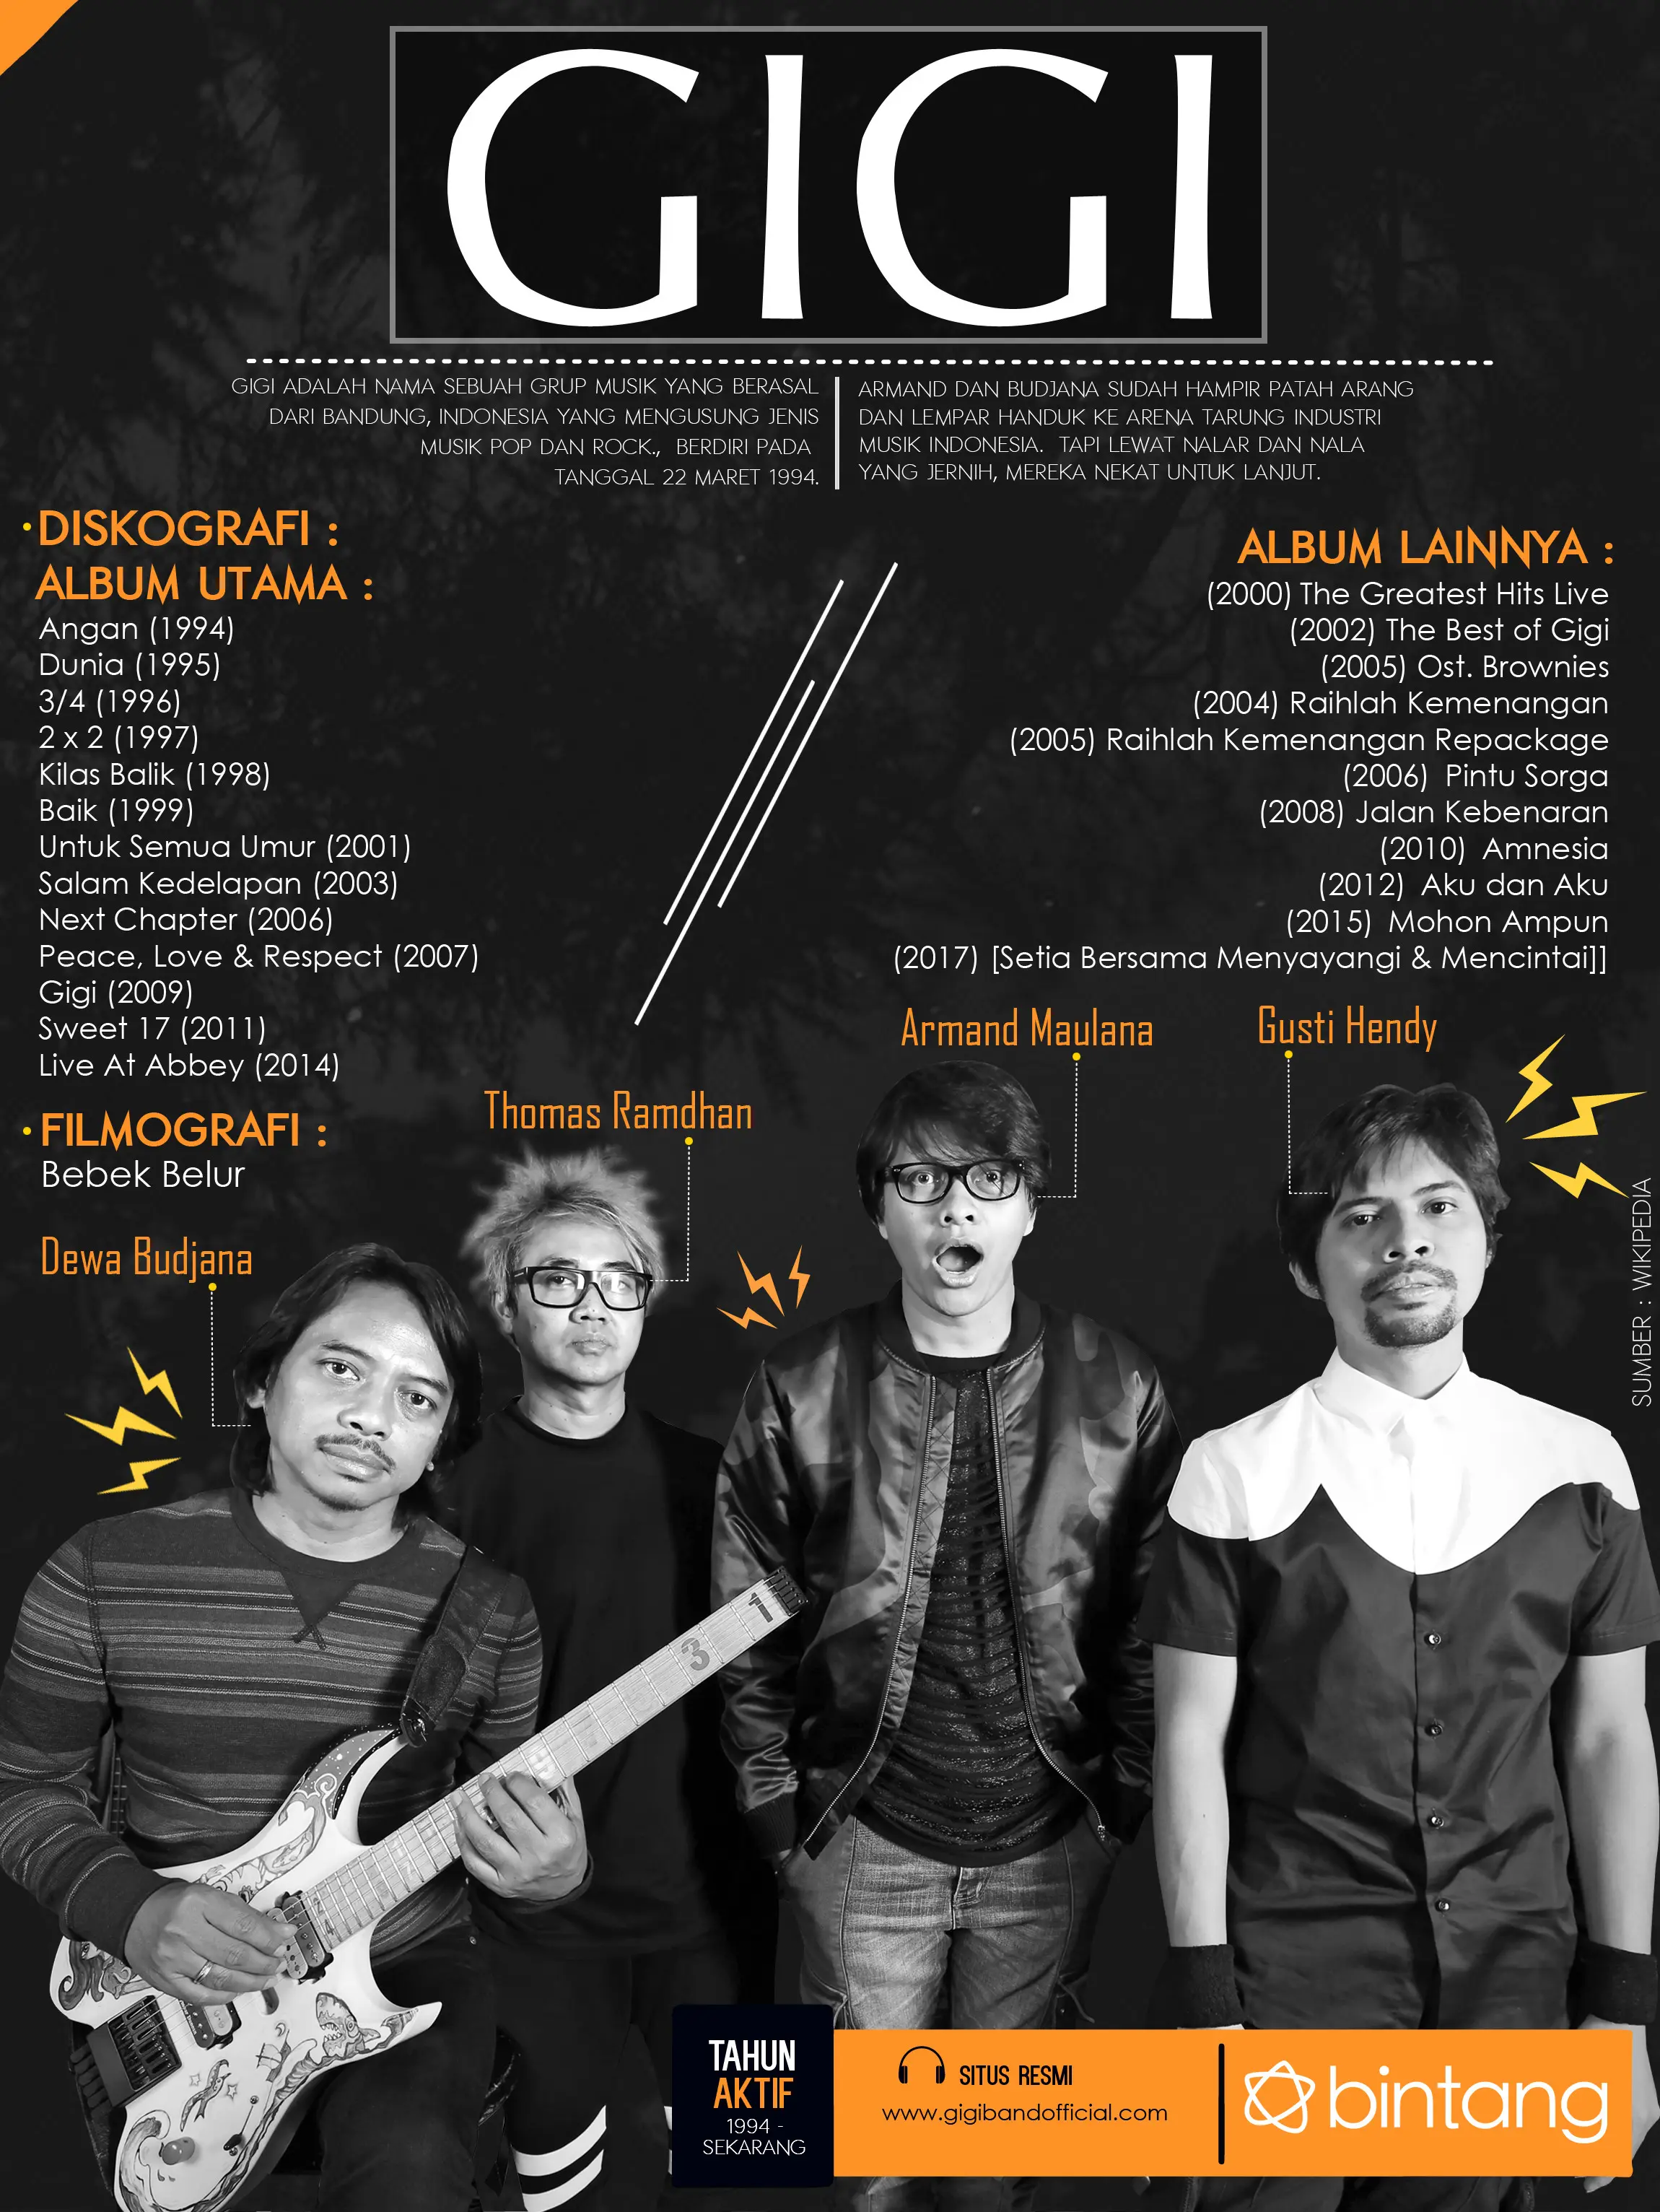 Celeb Bio GIGI (Photographer: Bambang E. Ros/Bintang.com, Desain: Nurman Abdul Hakim/Bintang.com)